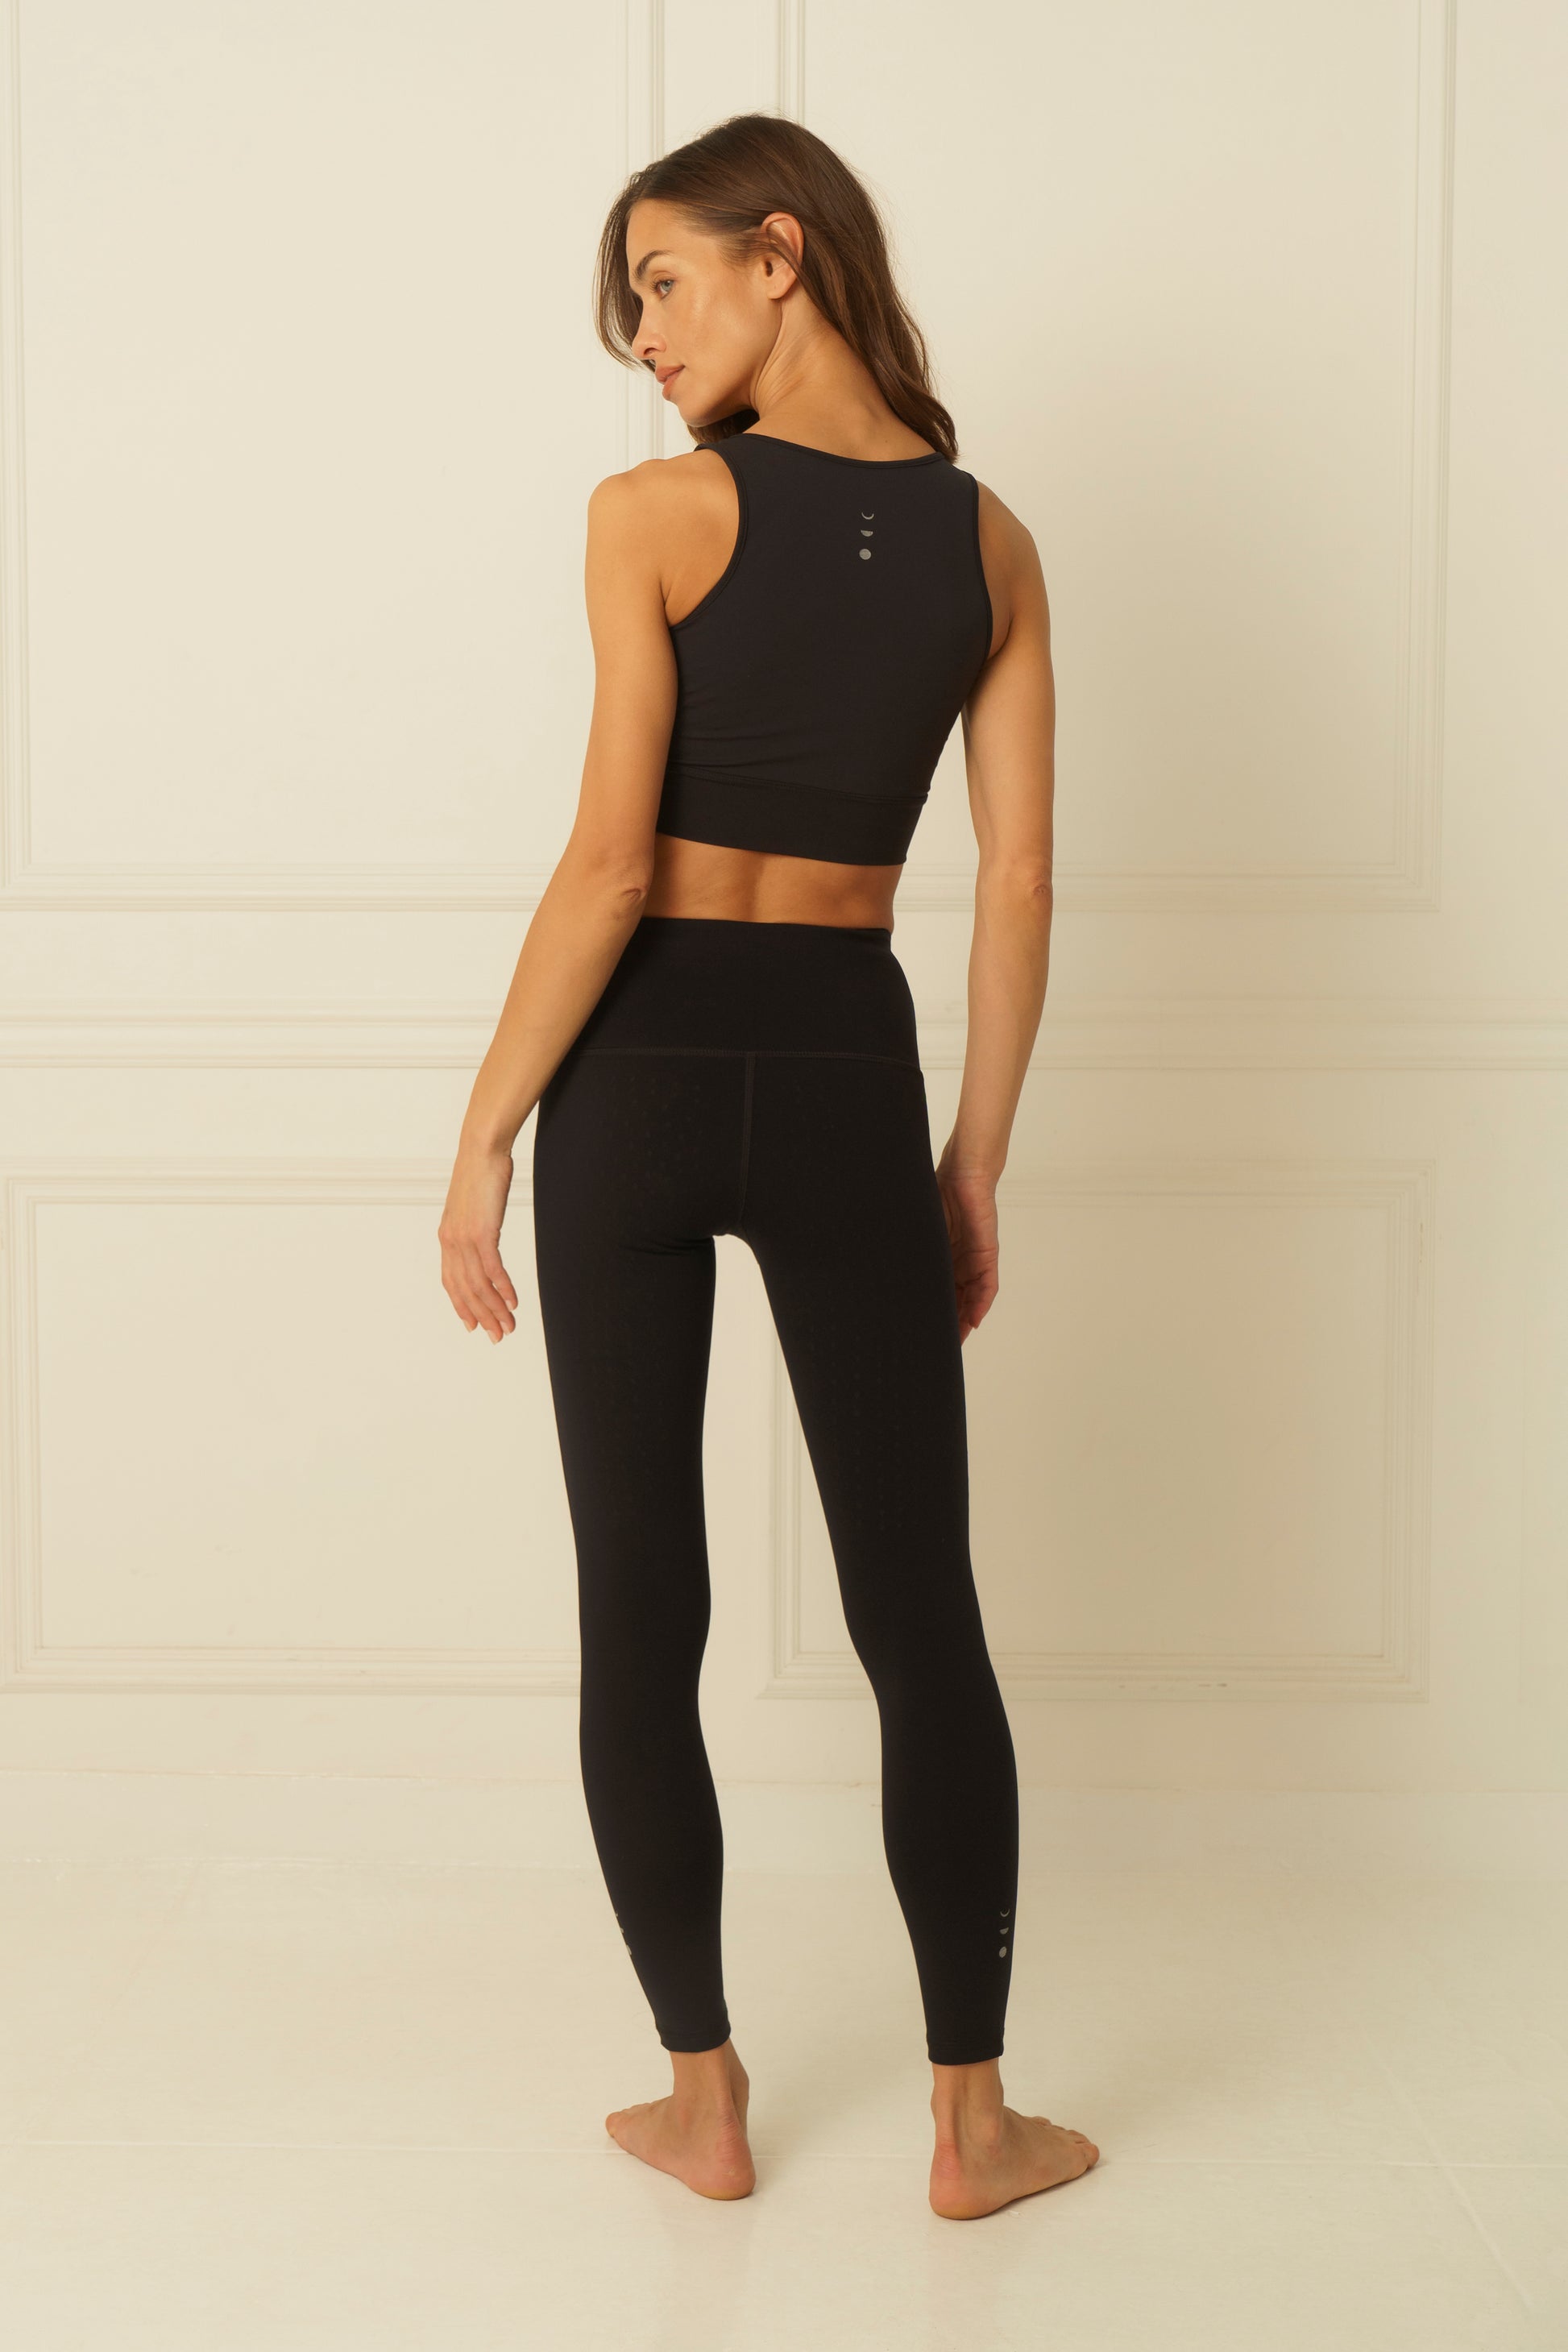 the balance collection women medium 8-10 solid black leggings